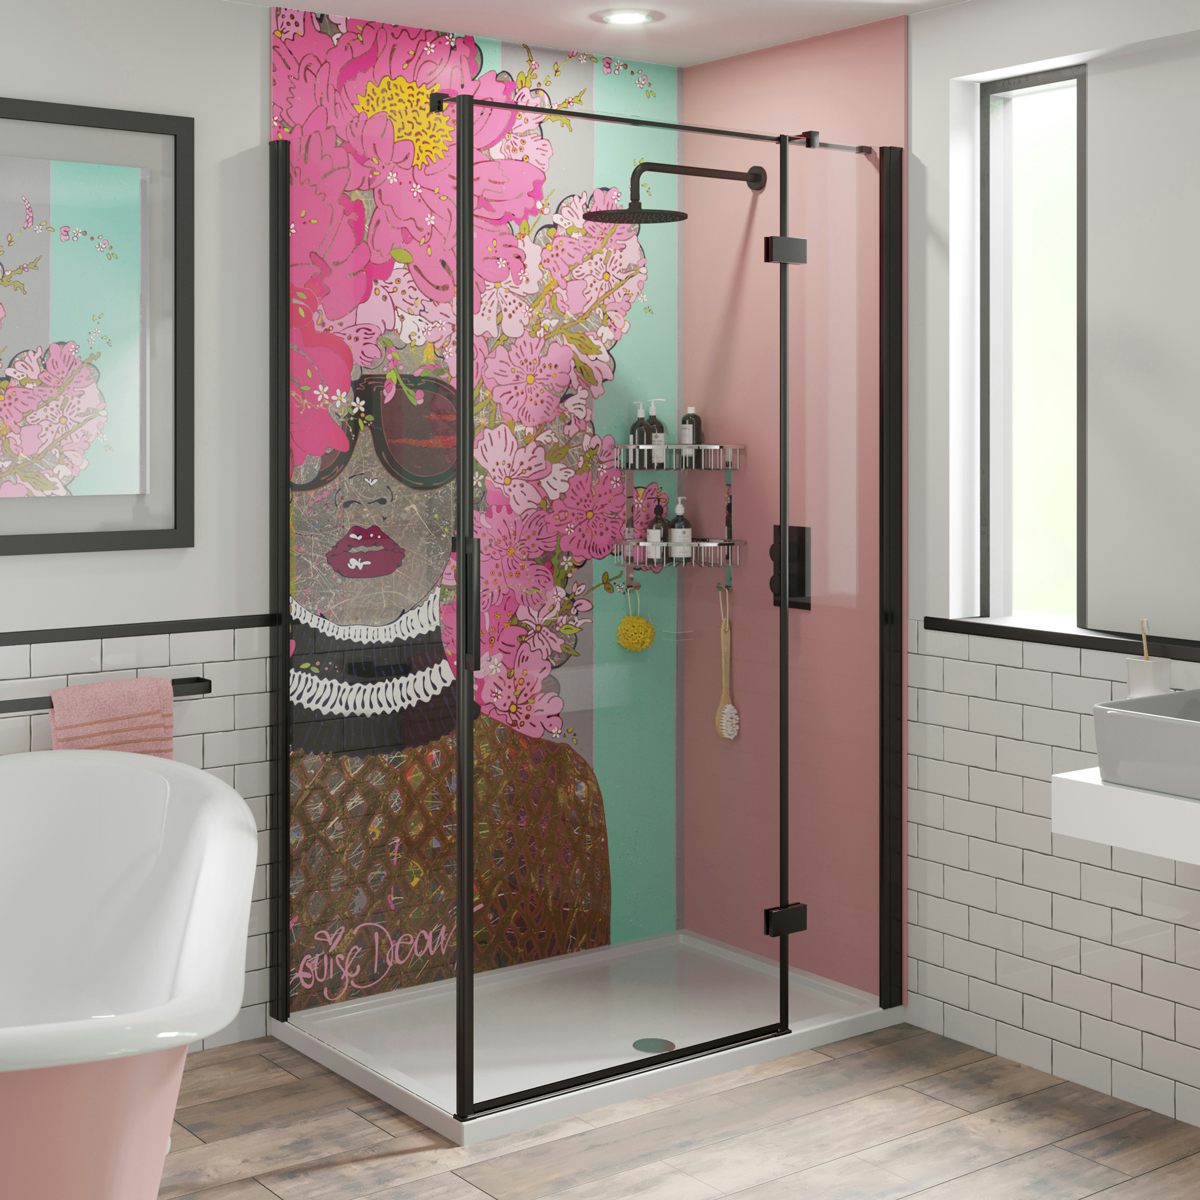 Louise Dear Kiss Kiss Bam Bam Light Pink acrylic shower wall panel pack with black rectangular enclosure